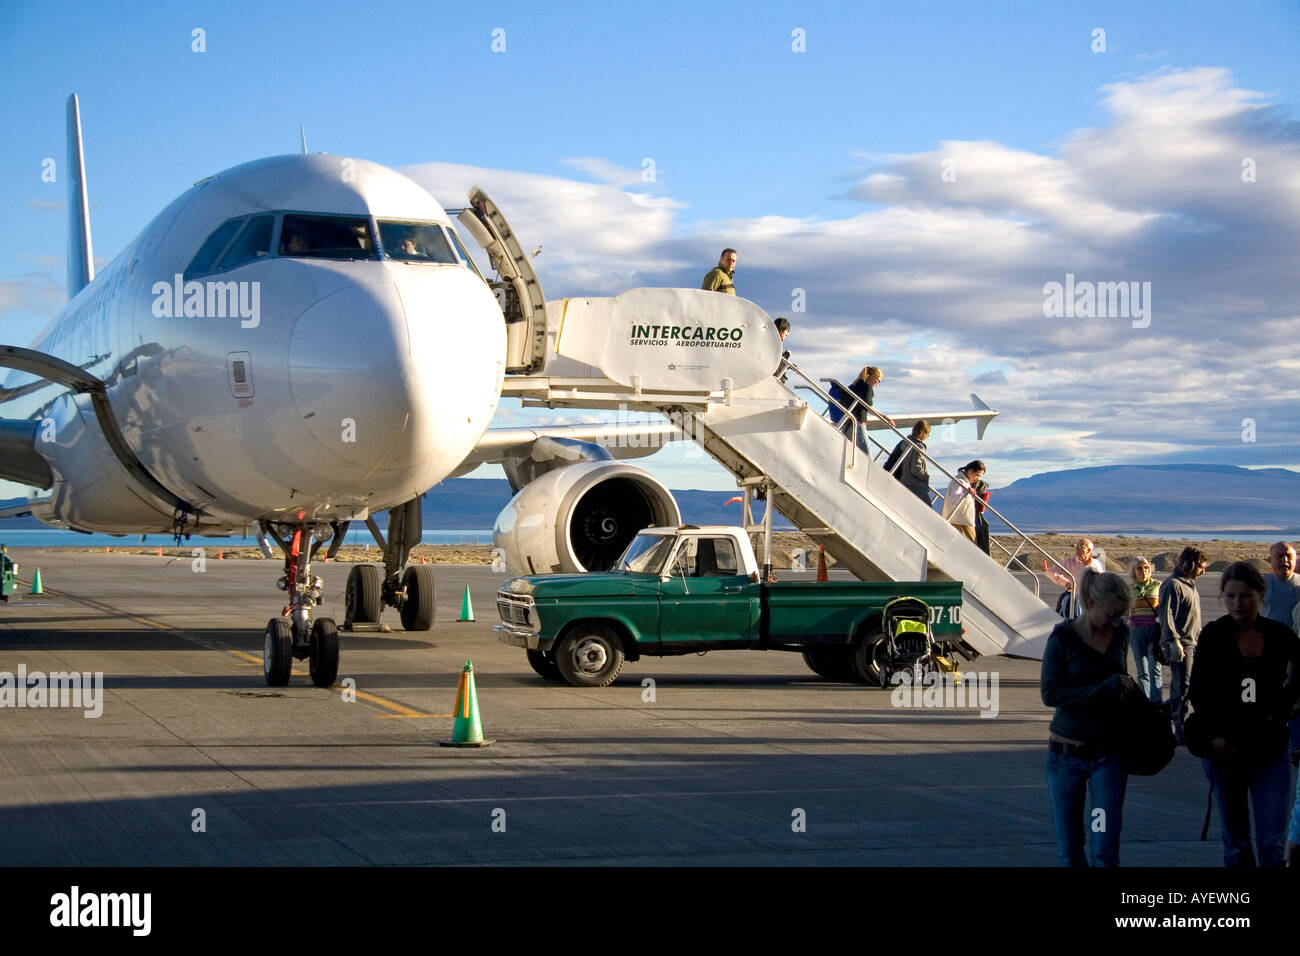 Passengers disembark an airplane at the El Calafate International Airport in Patagonia Argentina Stock Photo